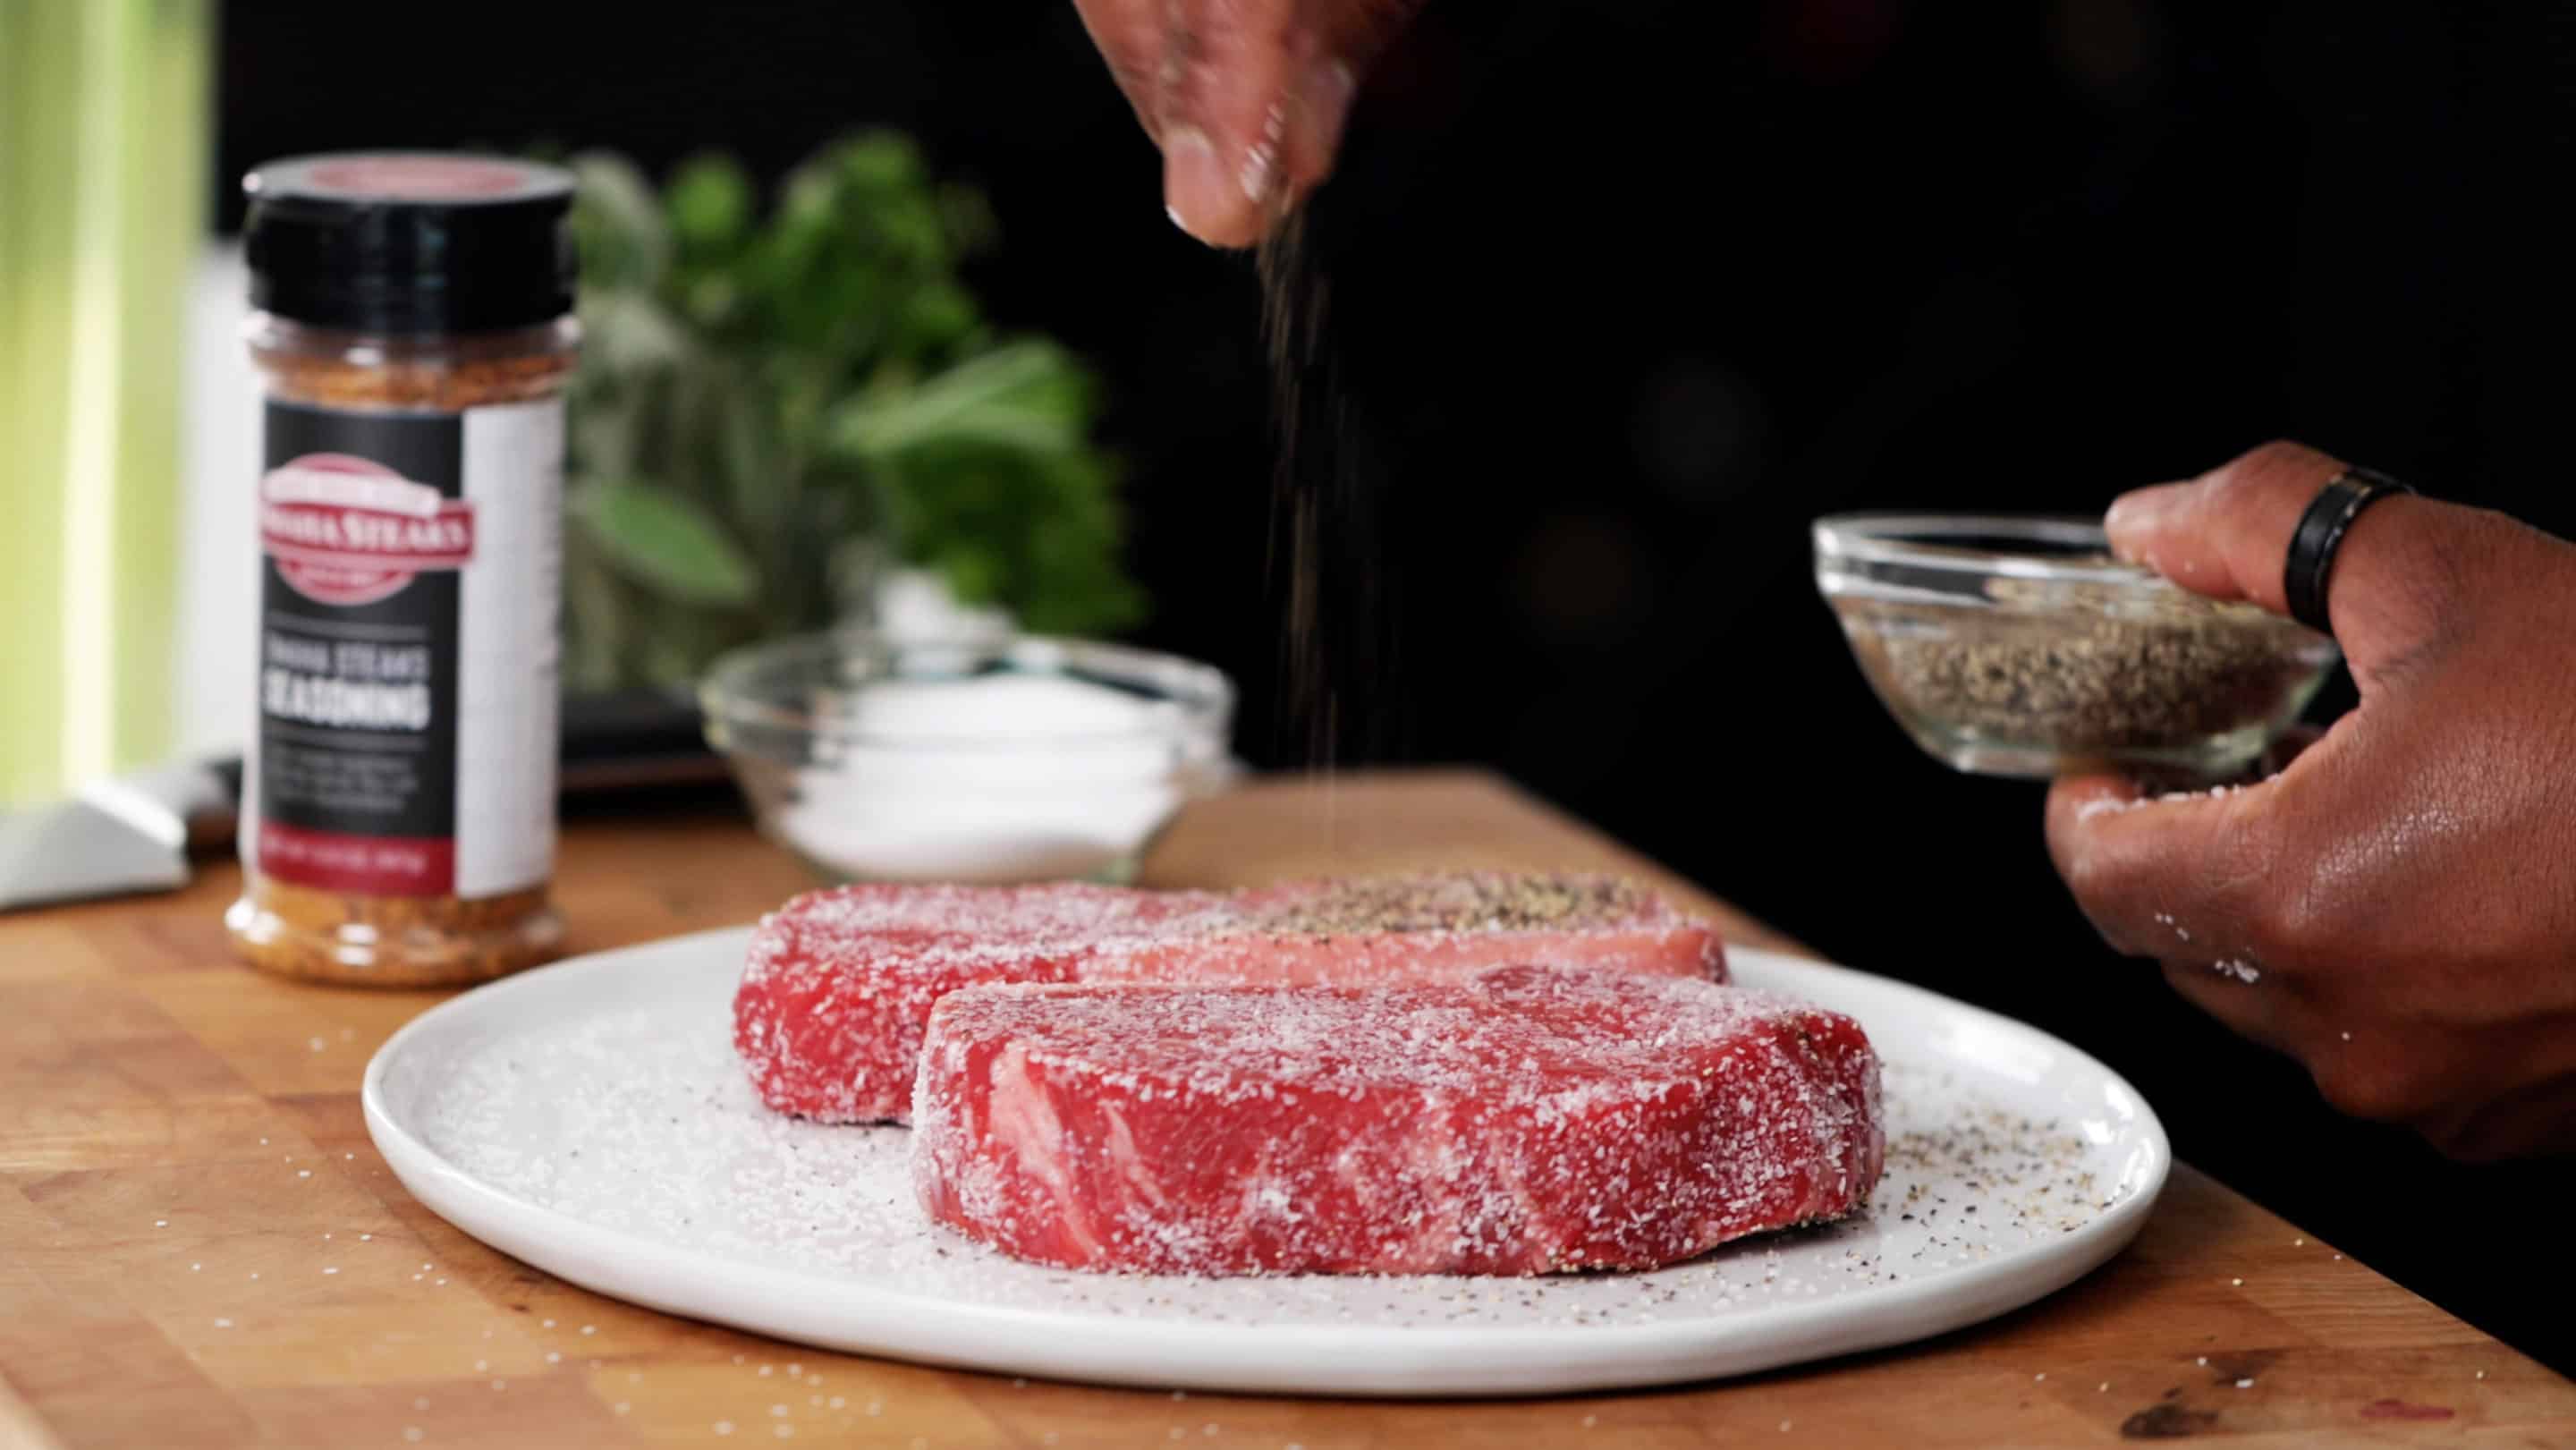 https://blog-content.omahasteaks.com/wp-content/uploads/2022/07/How-to-Season-Steak-blog-scaled.jpg